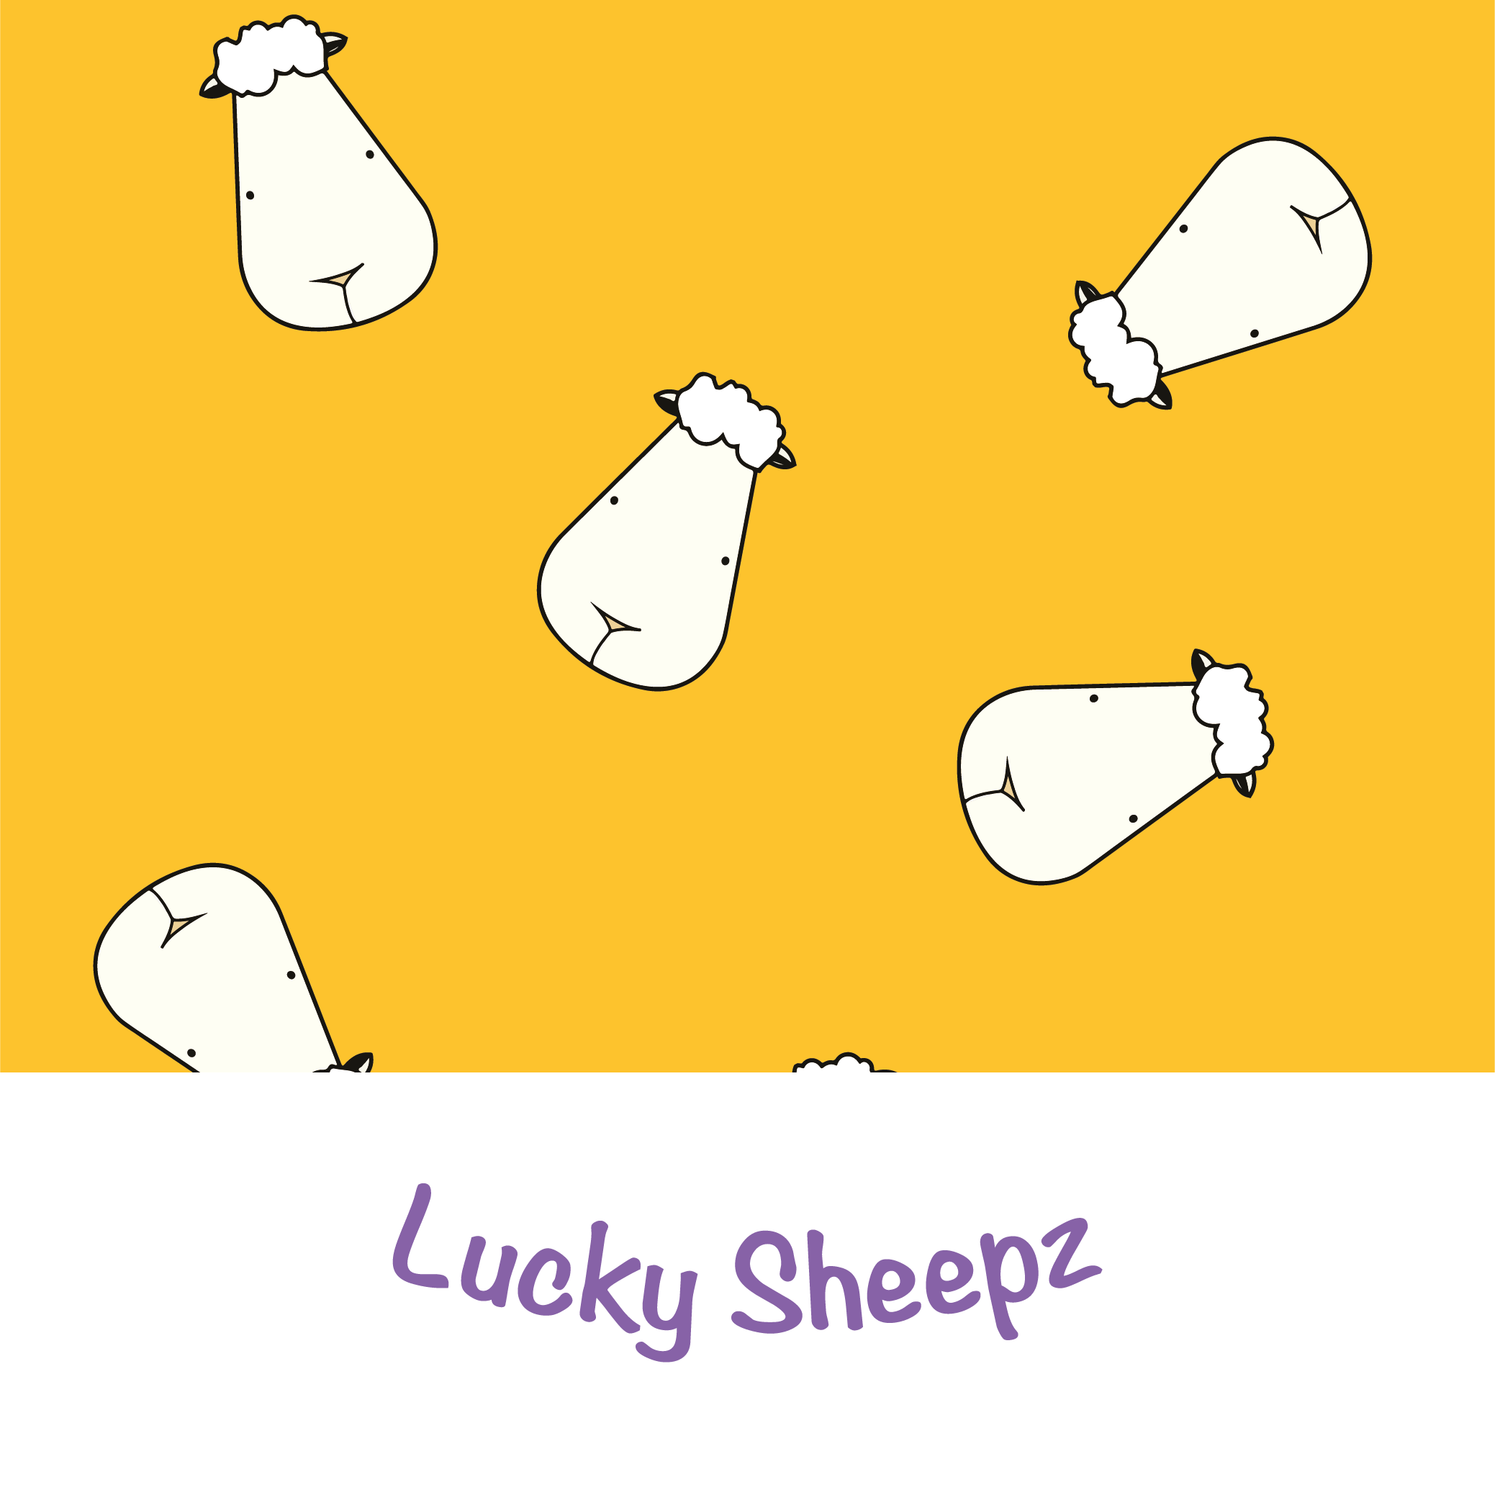 Lucky Sheepz